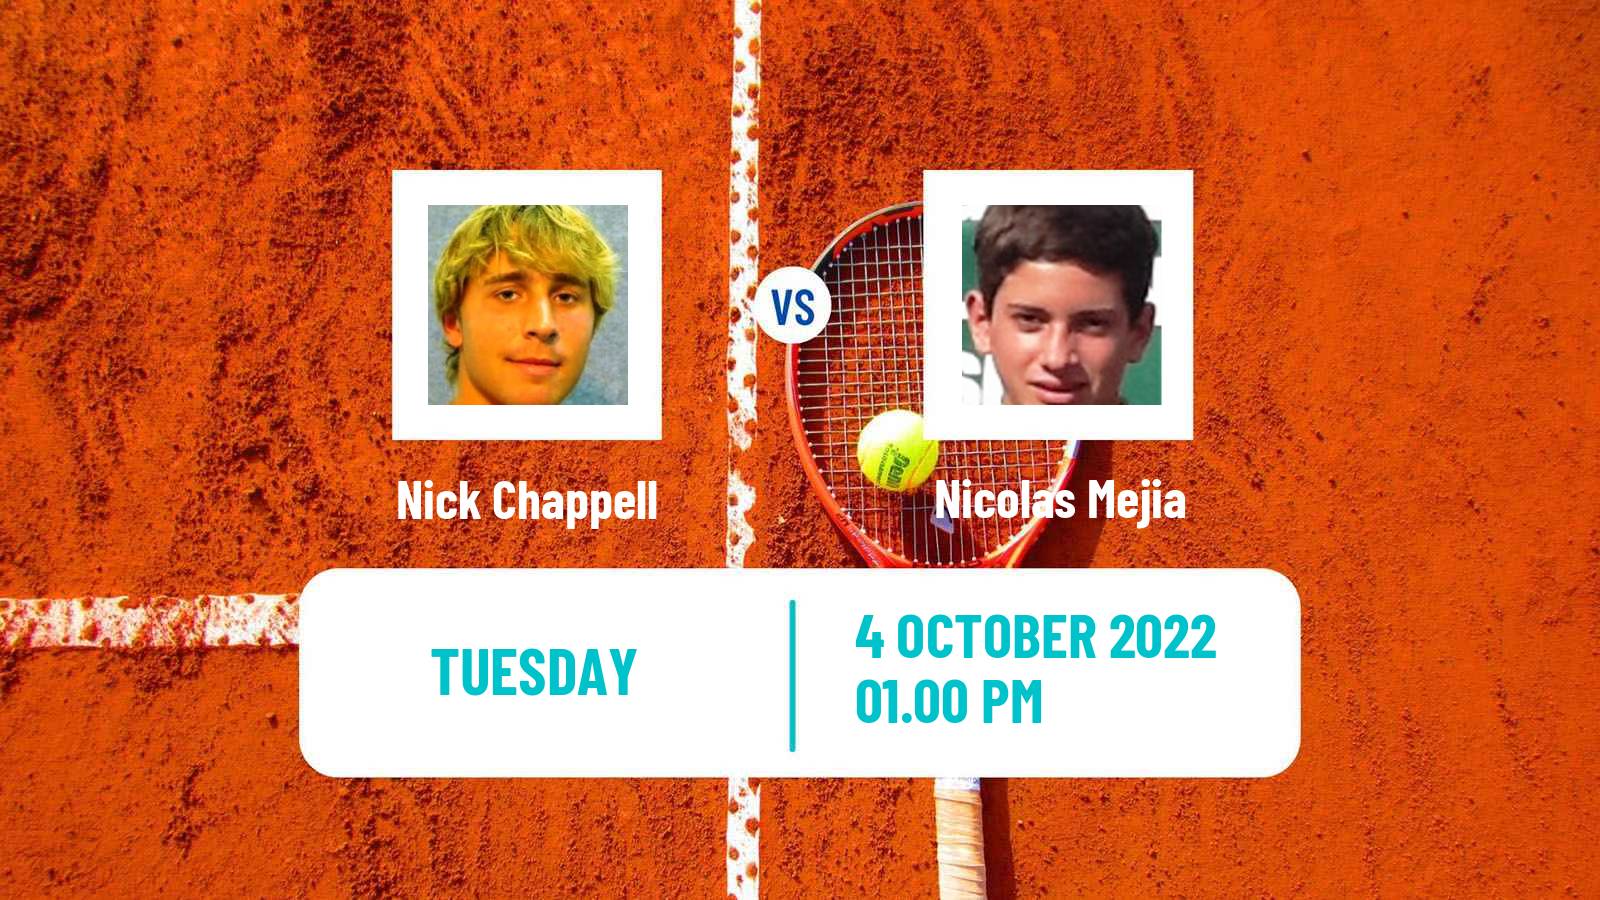 Tennis ATP Challenger Nick Chappell - Nicolas Mejia